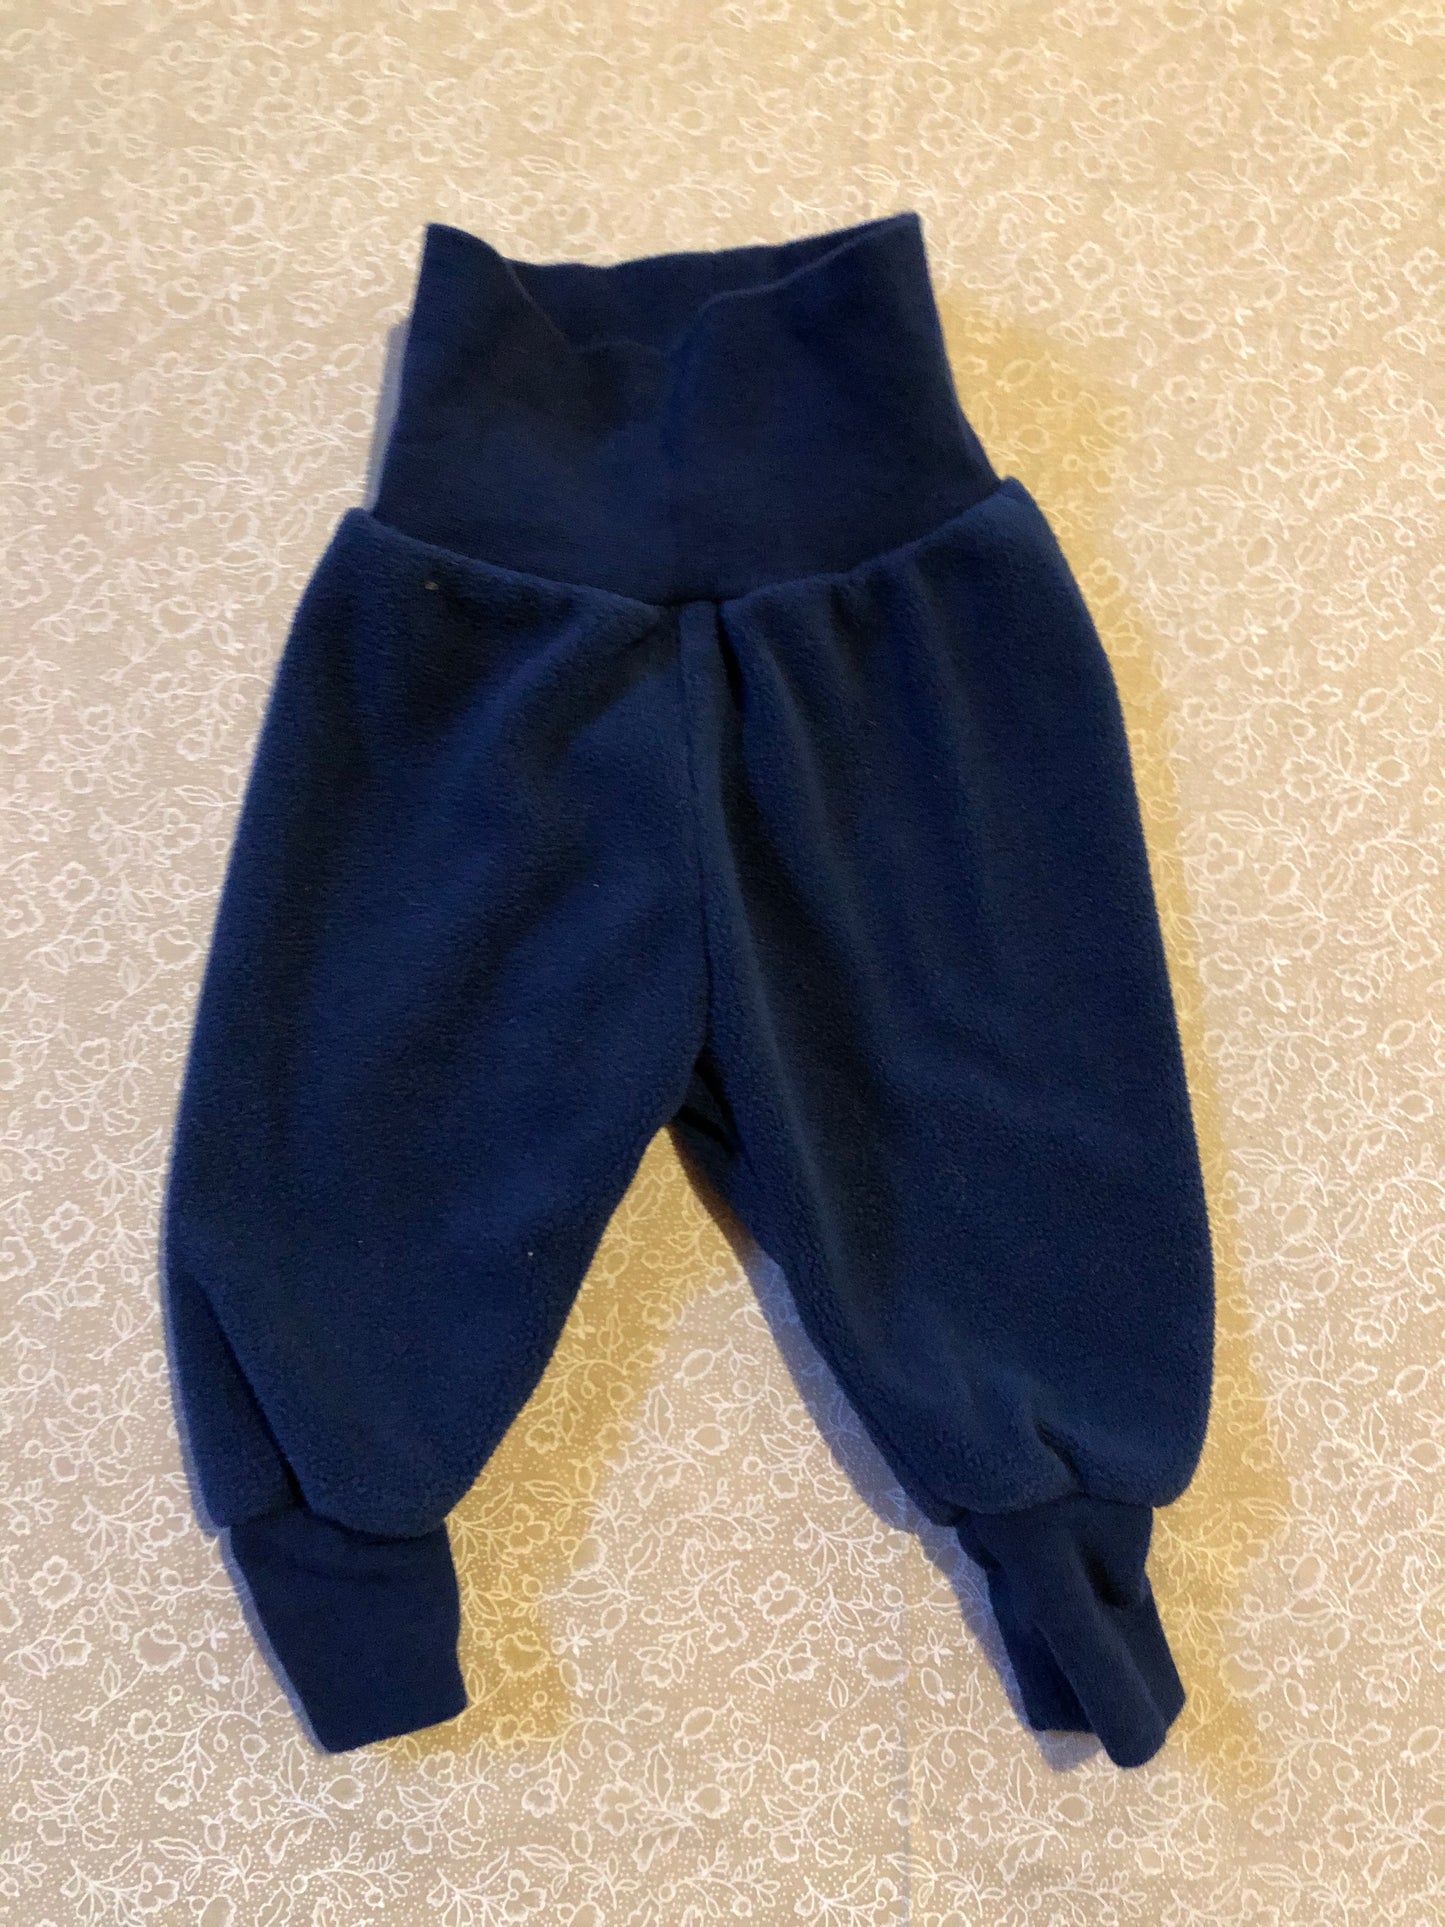 1-2-month-pants-hm-dark-blue-fleece